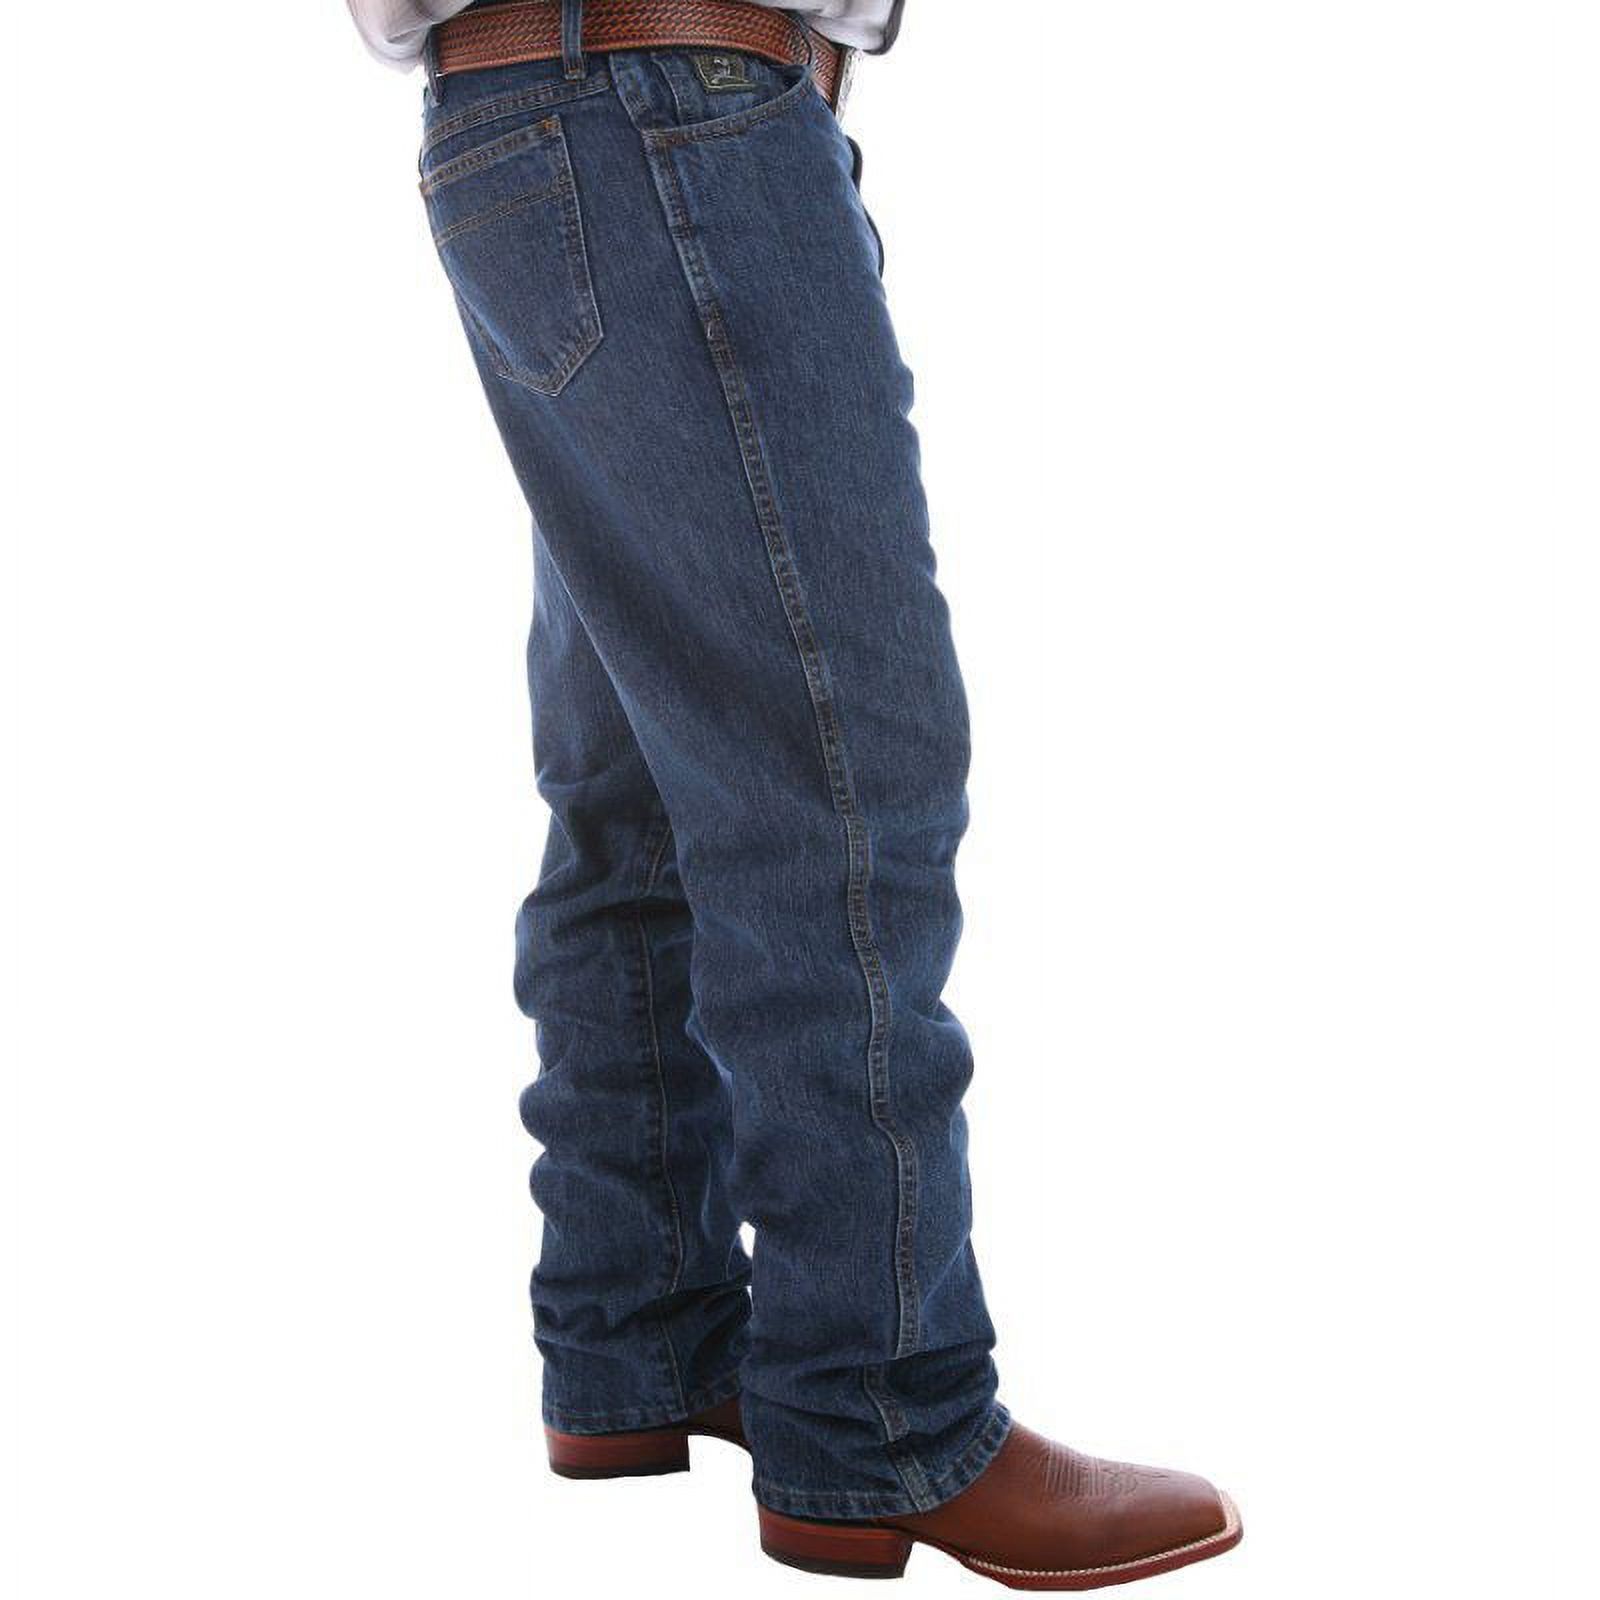 Cinch Apparel Mens Green Label Original Fit Jeans 44x36 Dark Stonewash - image 2 of 4